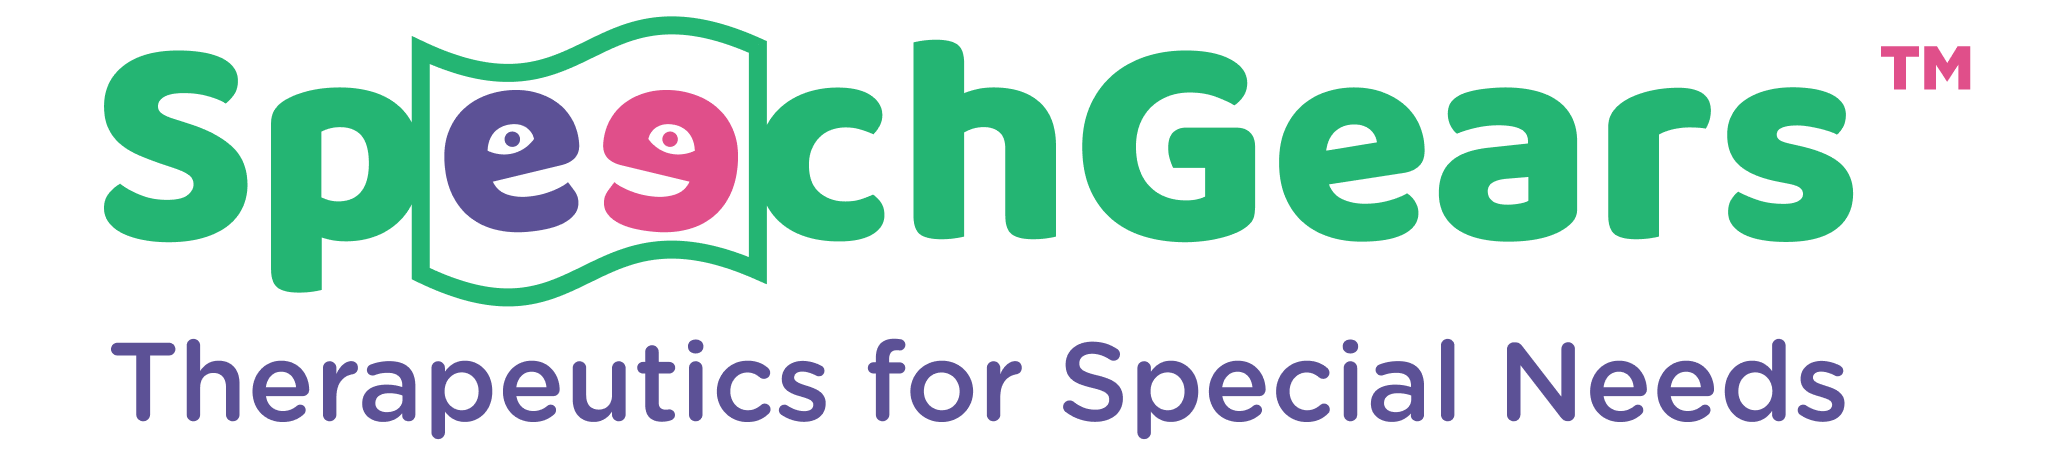 SpeechGears India